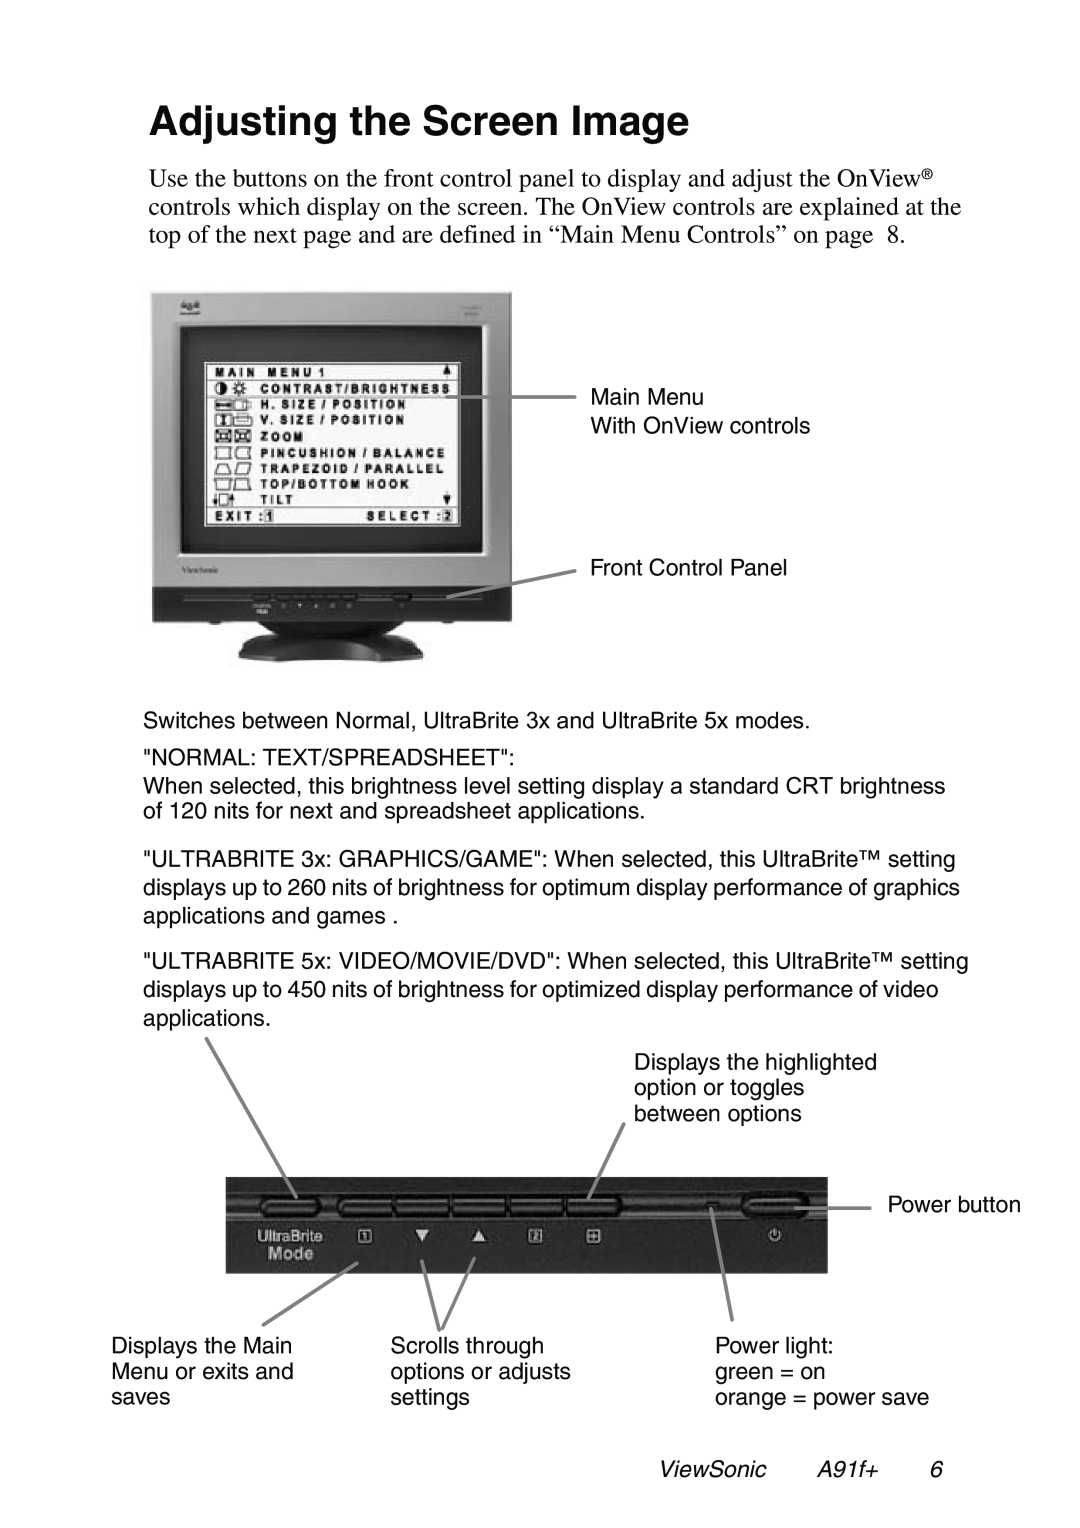 ViewSonic A91f+ manual Adjusting the Screen Image, ViewSonic 